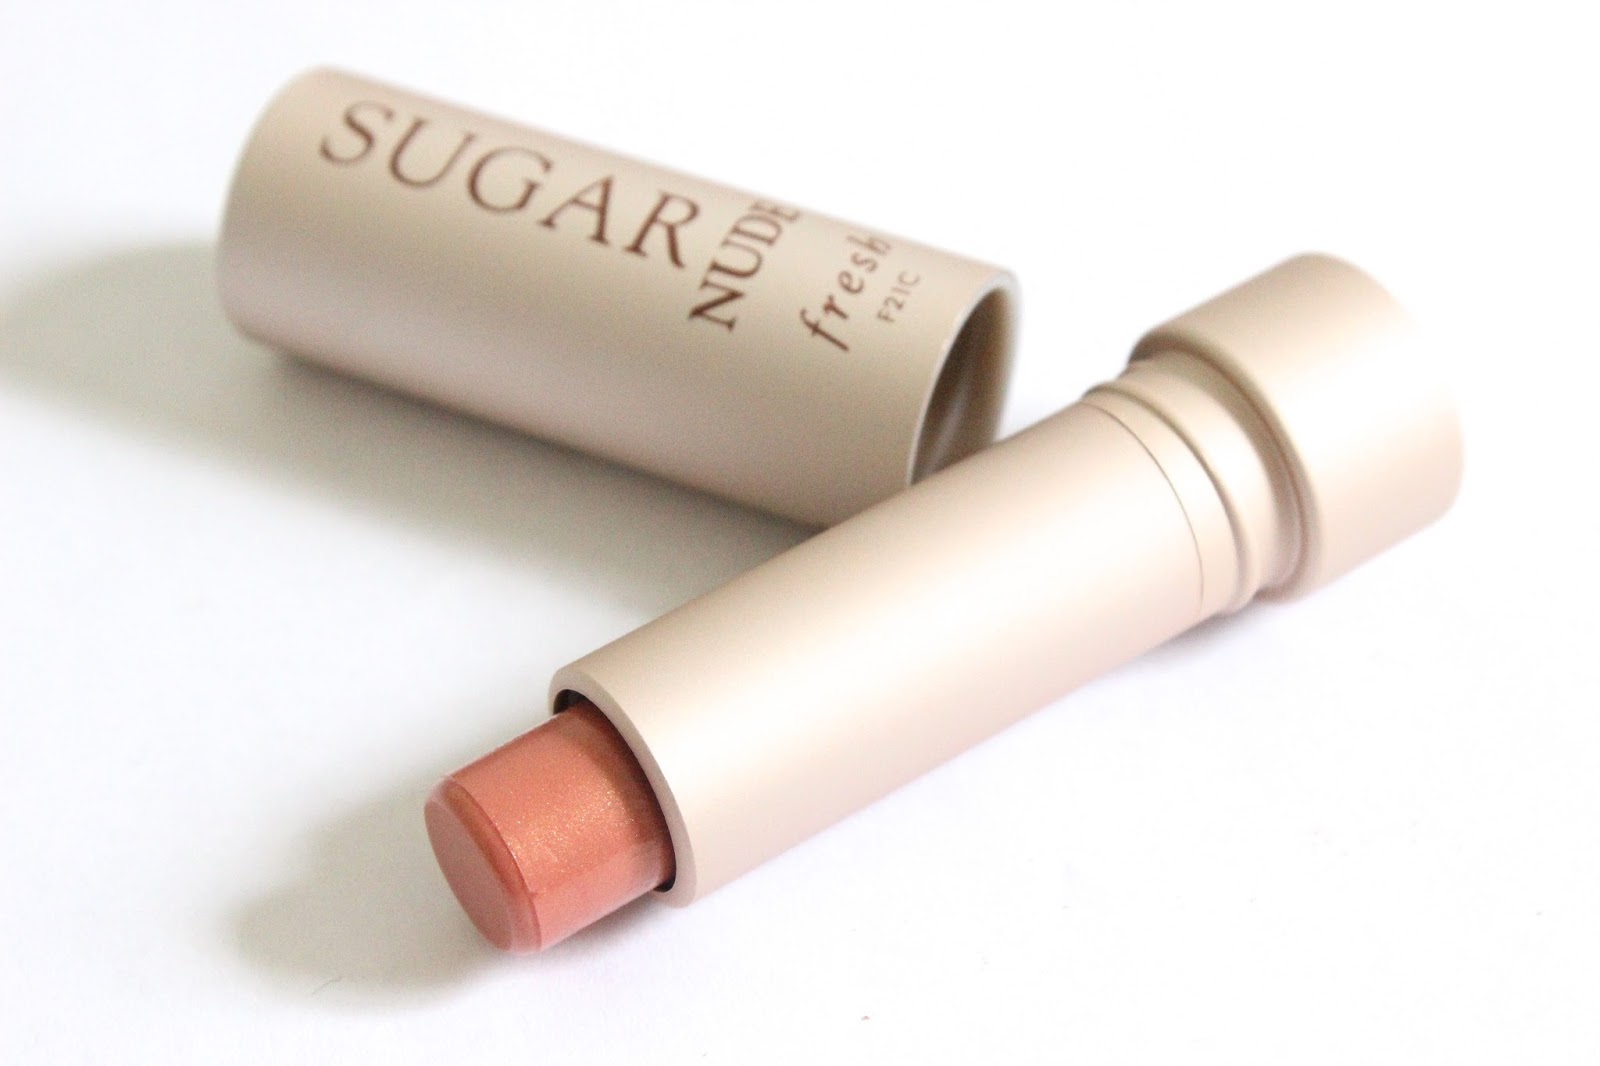 Fresh Sugar Nude Tinted Lip Treatment